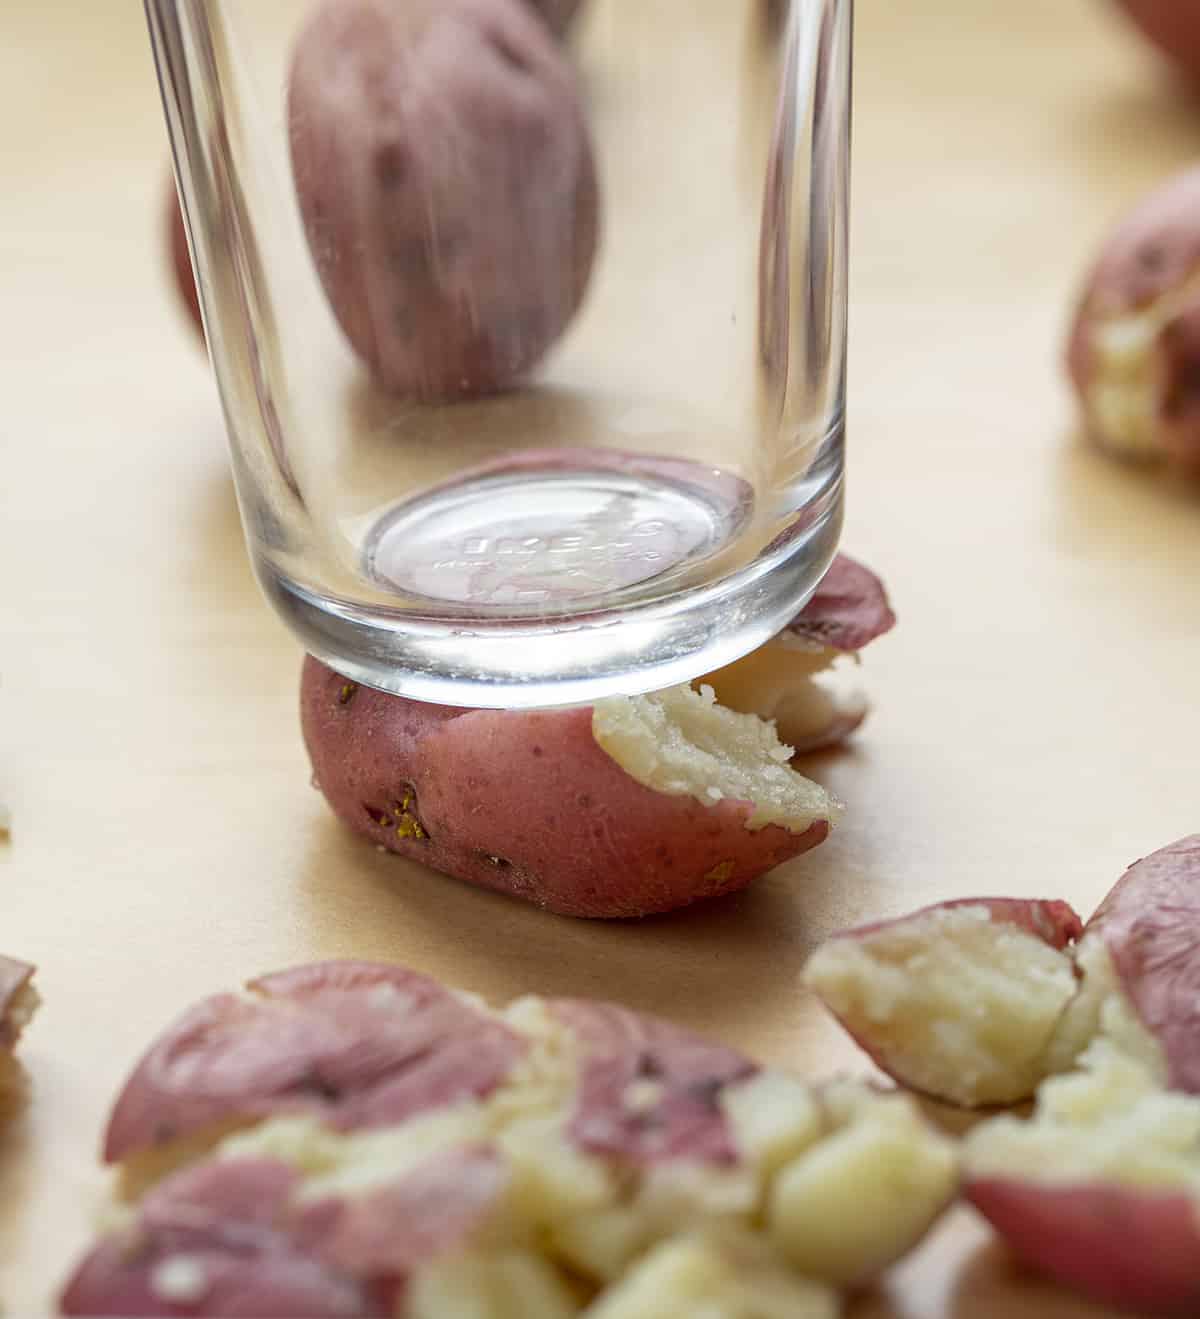 Smashing Glass into Boiled Mashed Potatoes